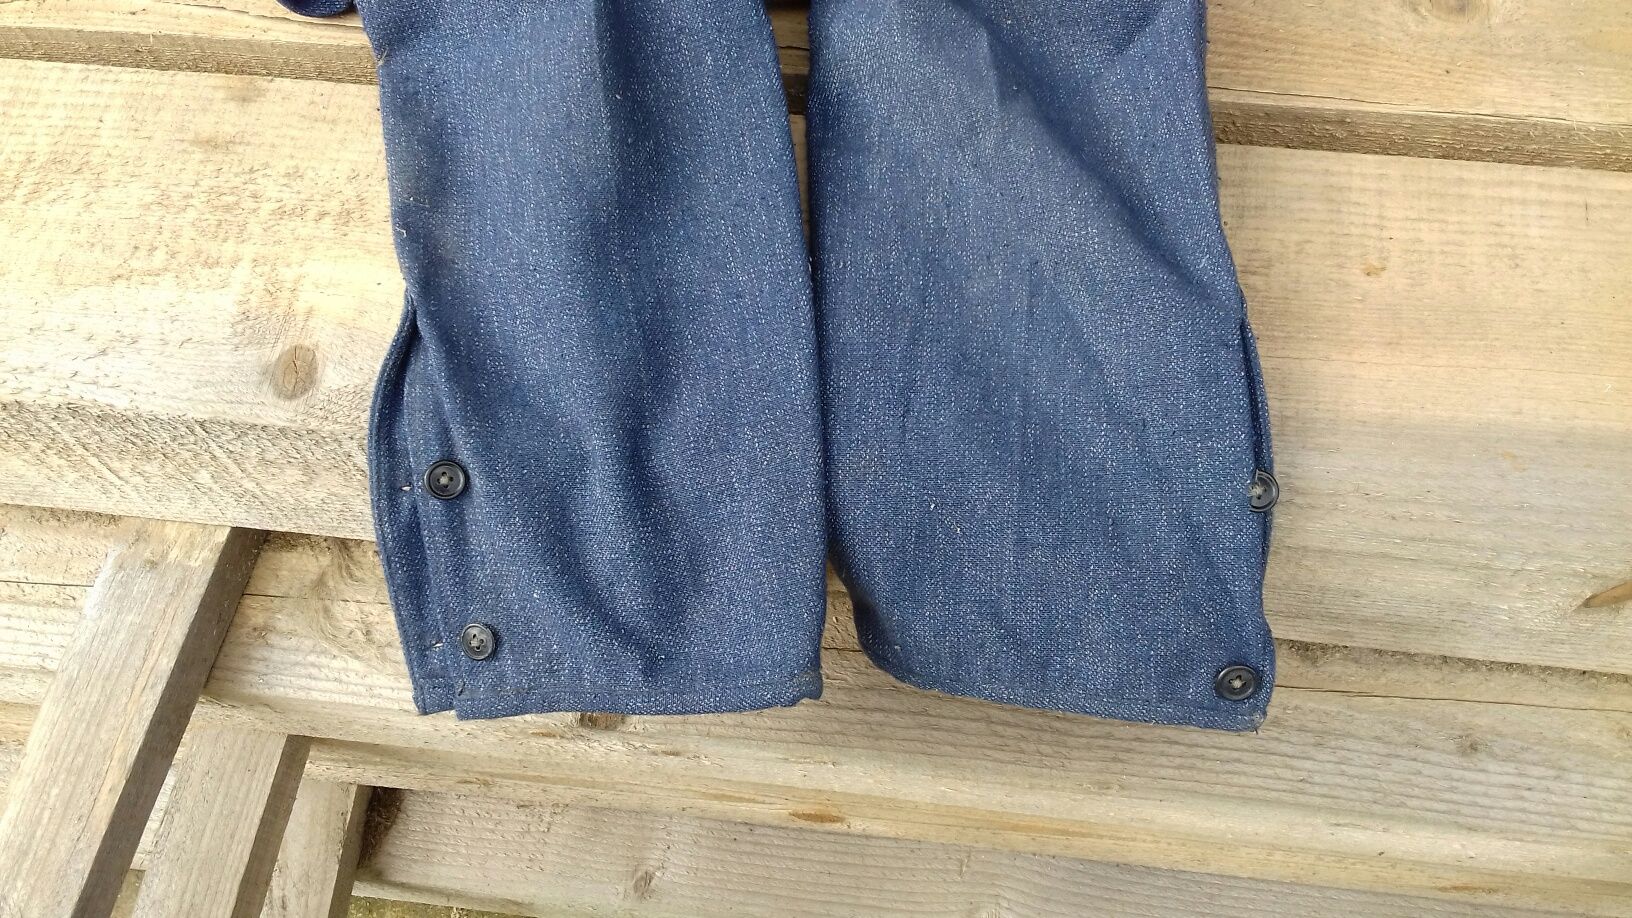 Pantaloni bărbătești (țărănești)vintage